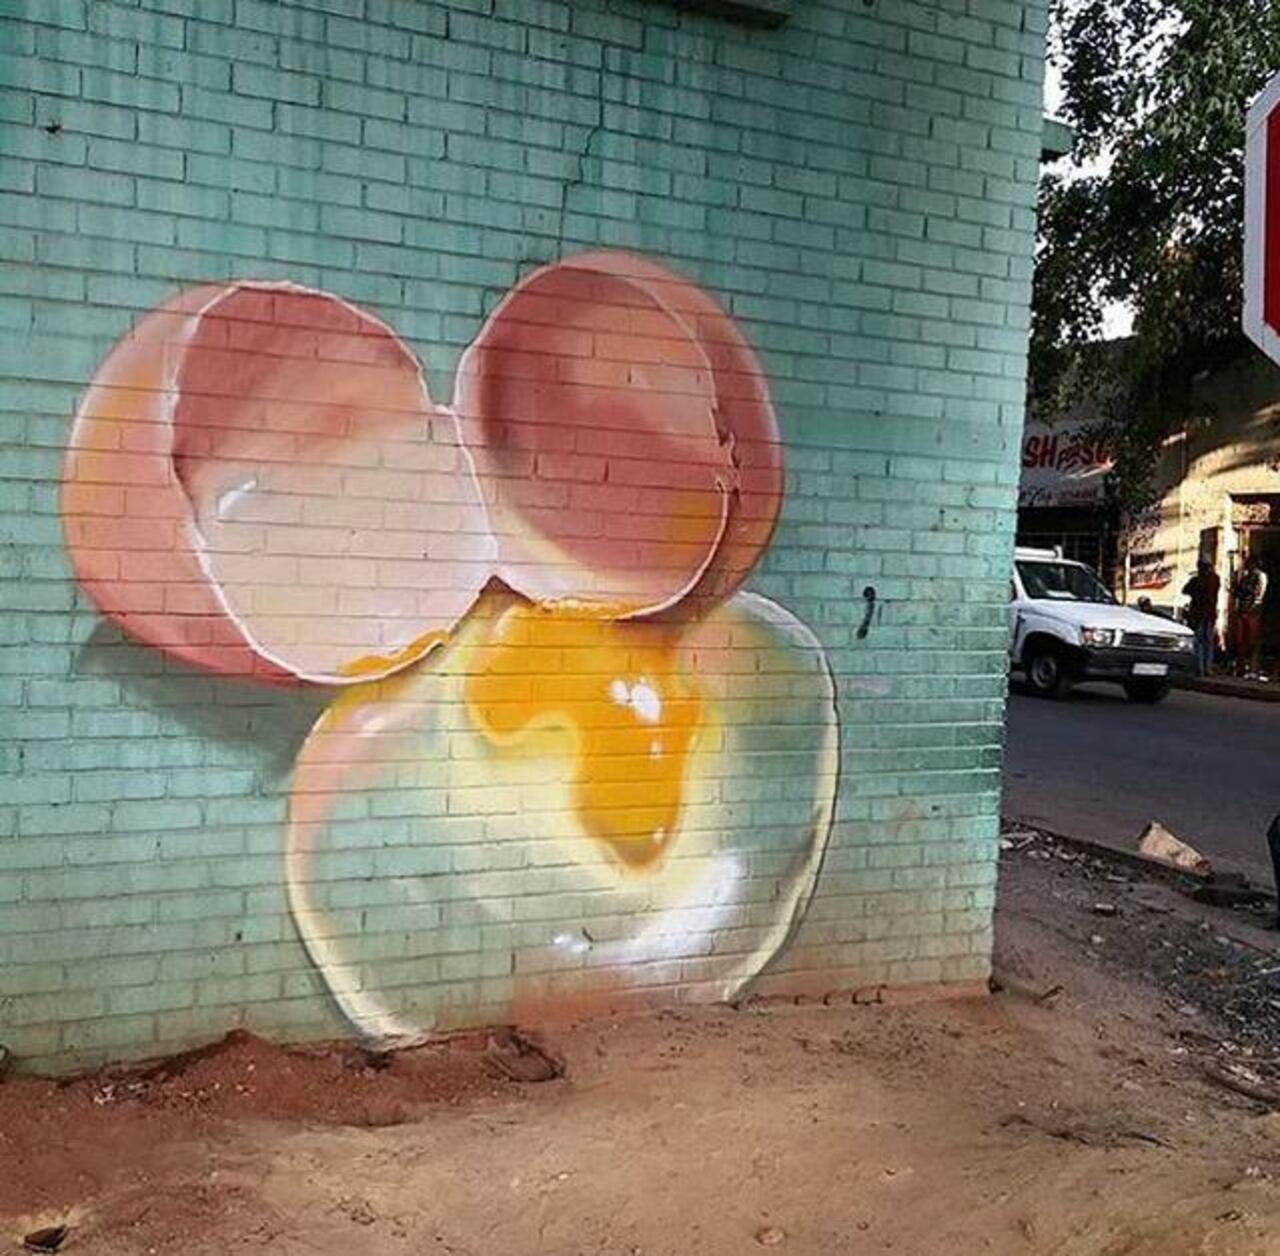 Street Art by falco1 in Johannesburg SA  

#art #graffiti #mural #streetart http://t.co/5NpmW5WHzN